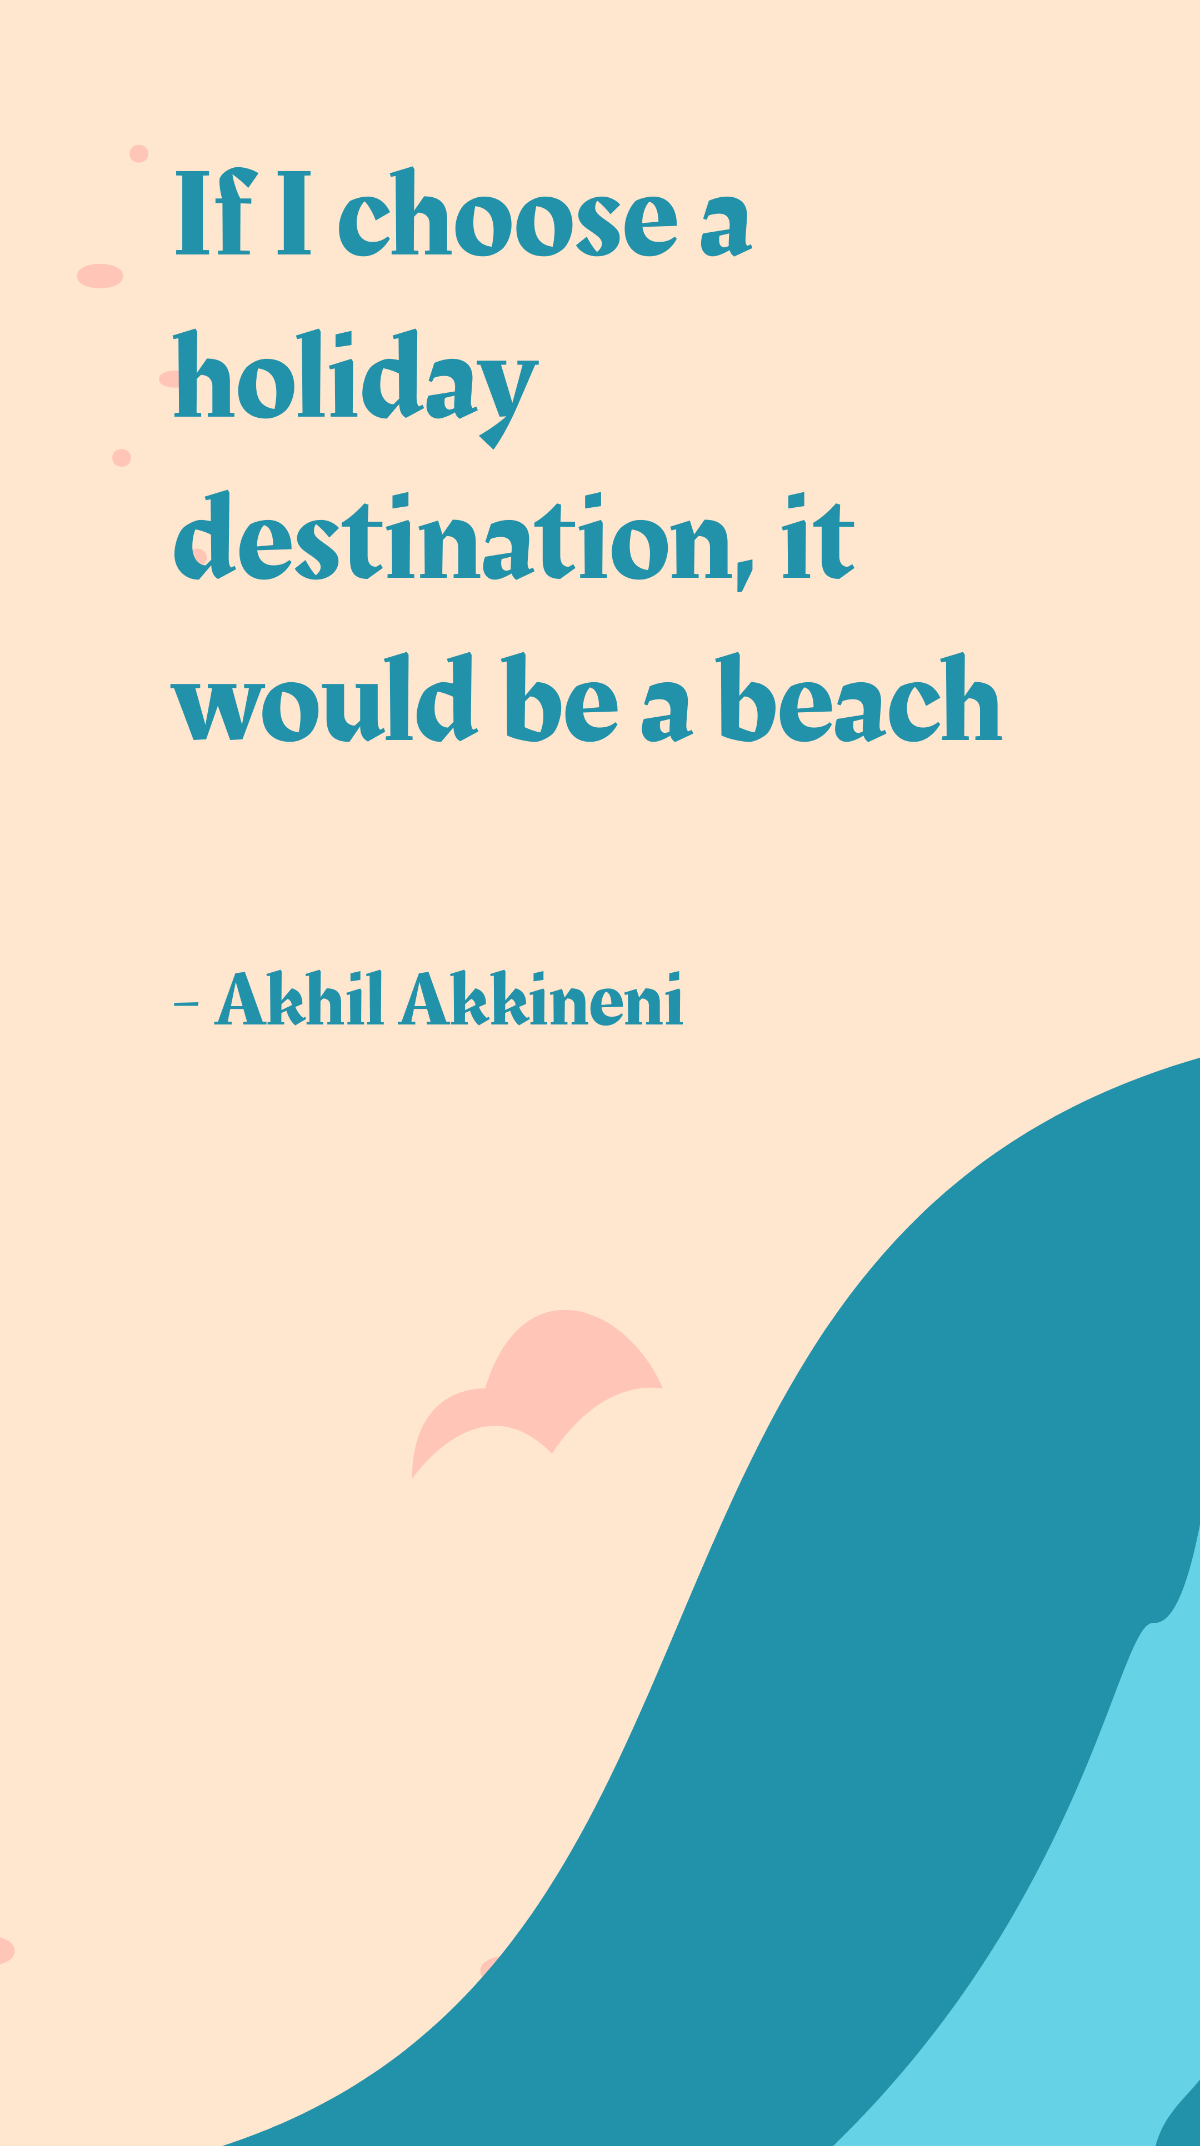 Akhil Akkineni - If I choose a holiday destination, it would be a beach